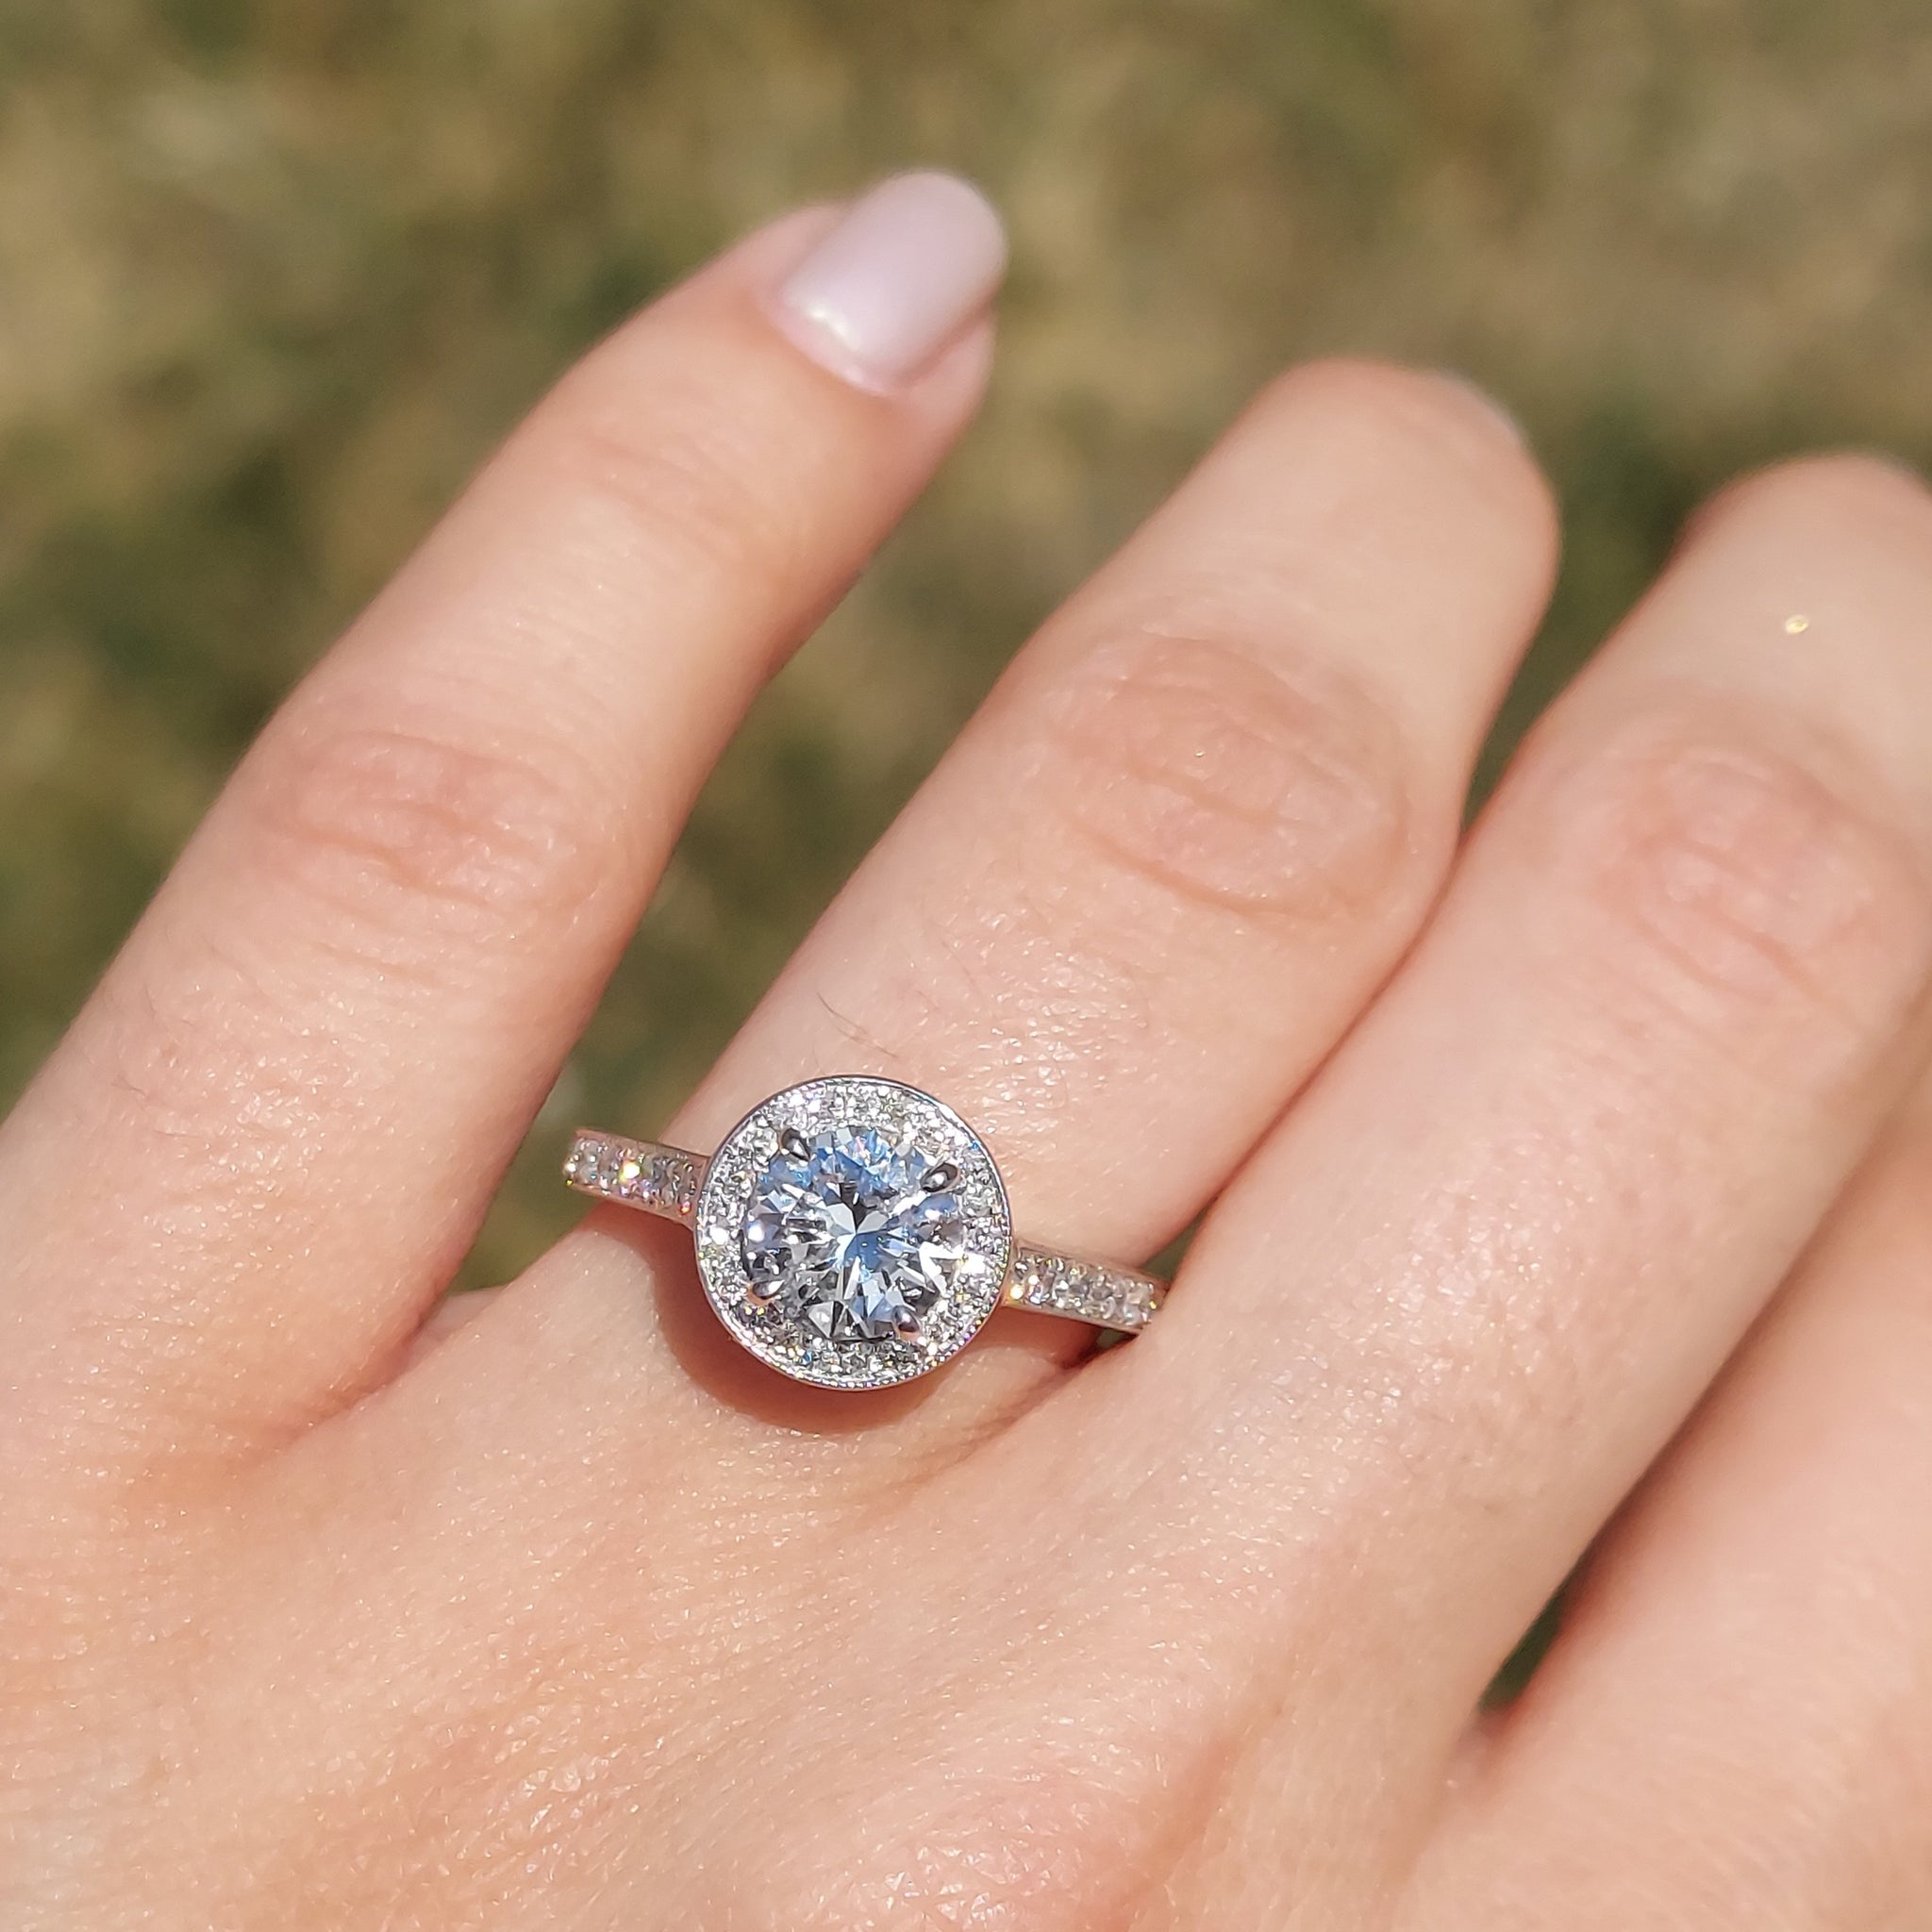 Verragio Tradition Cushion Halo Round Diamond Engagement Ring Setting